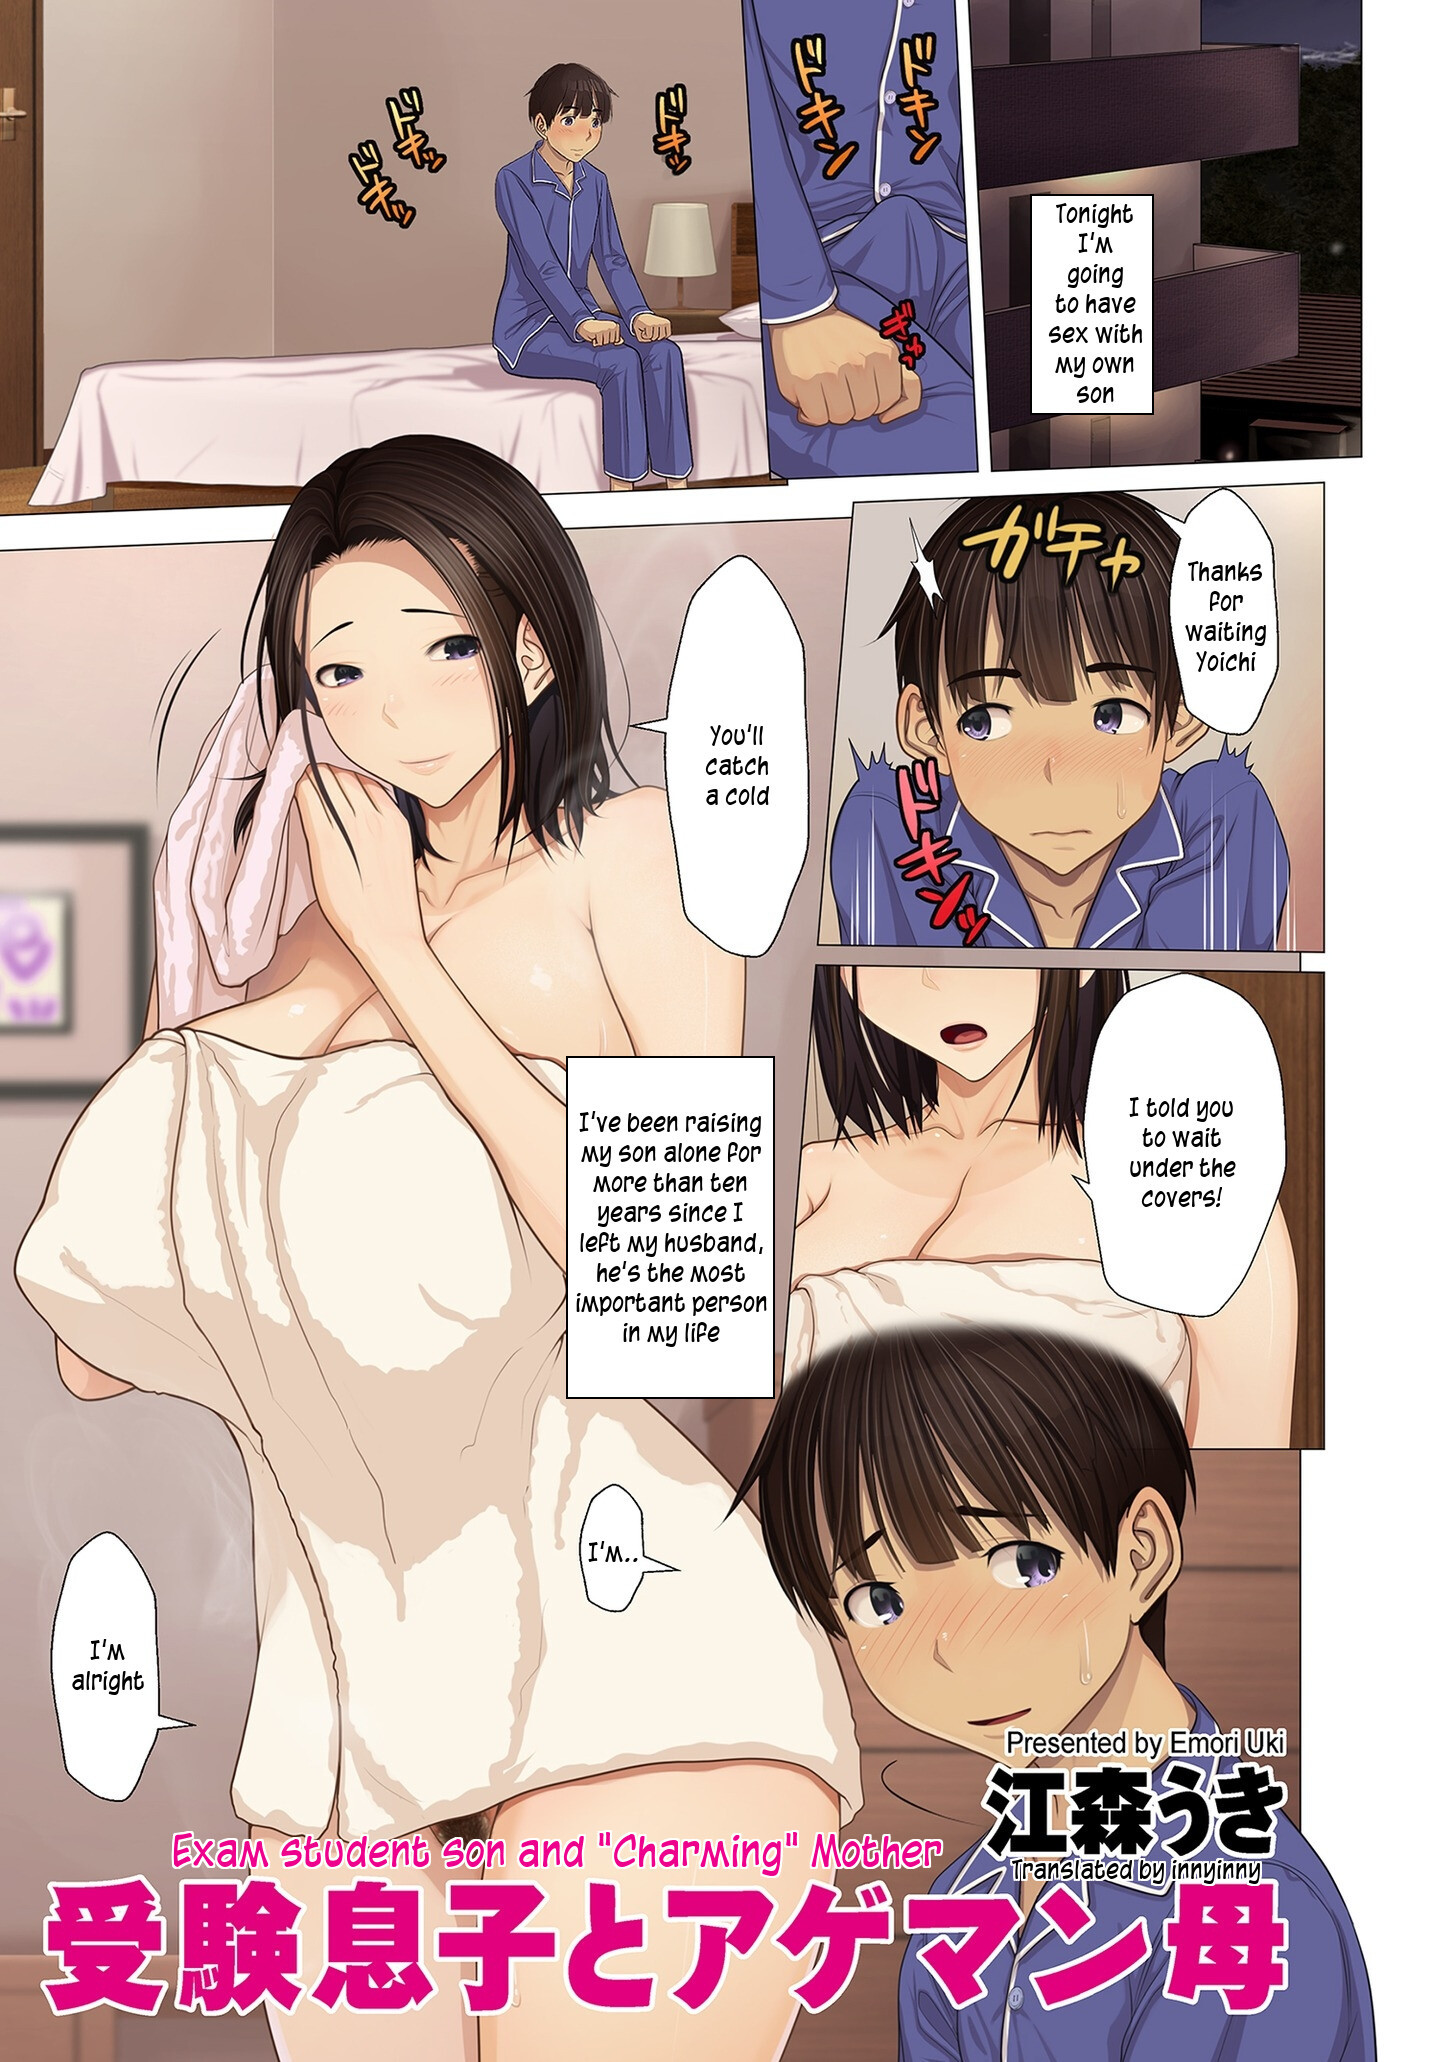 anime girl and boy having sex